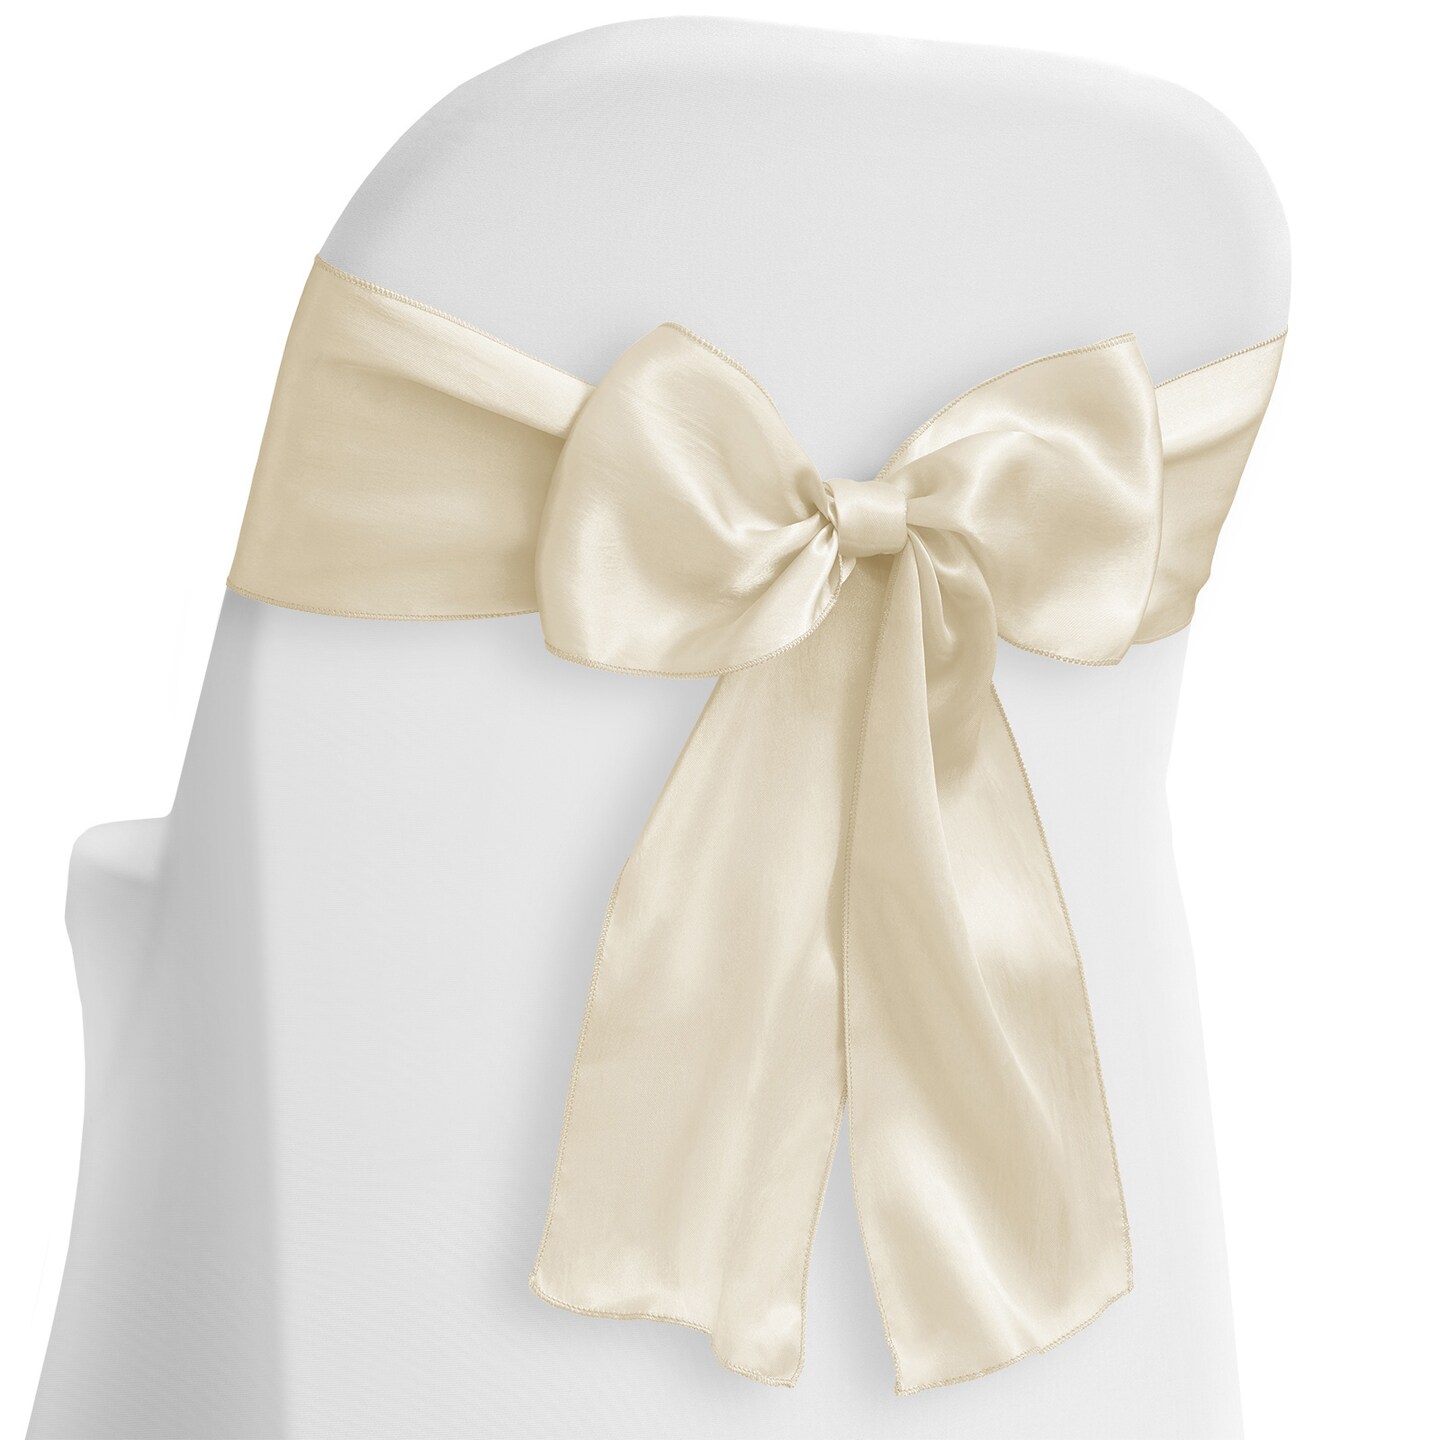 Lann's Linens - Elegant Satin Wedding/Party Chair Cover Sashes/Bows -  Ribbon Tie Back Sash